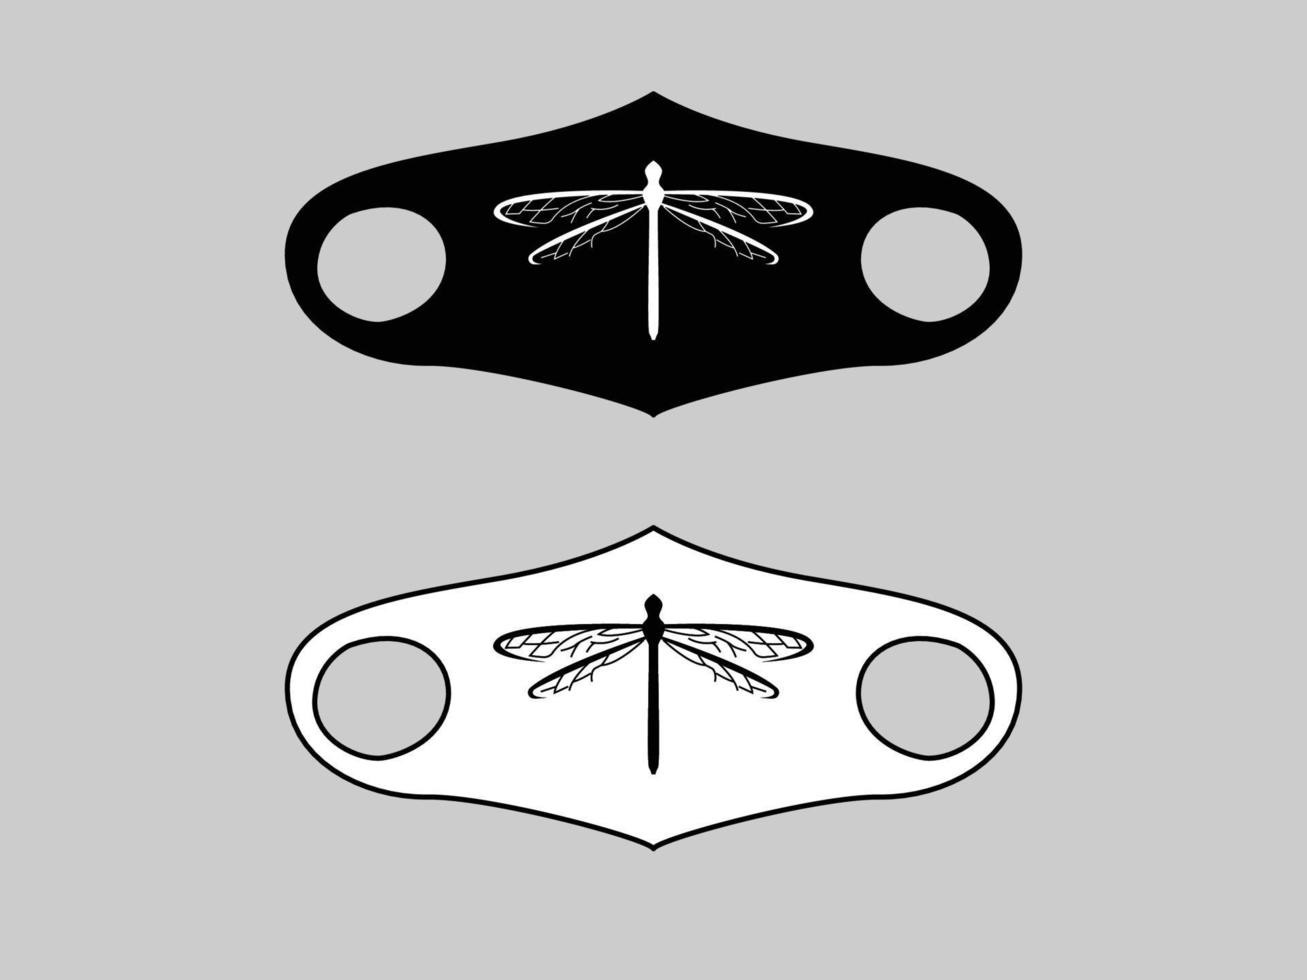 conception de masques avec des images de libellules, masques contemporains, dessins de masques illustrés vecteur